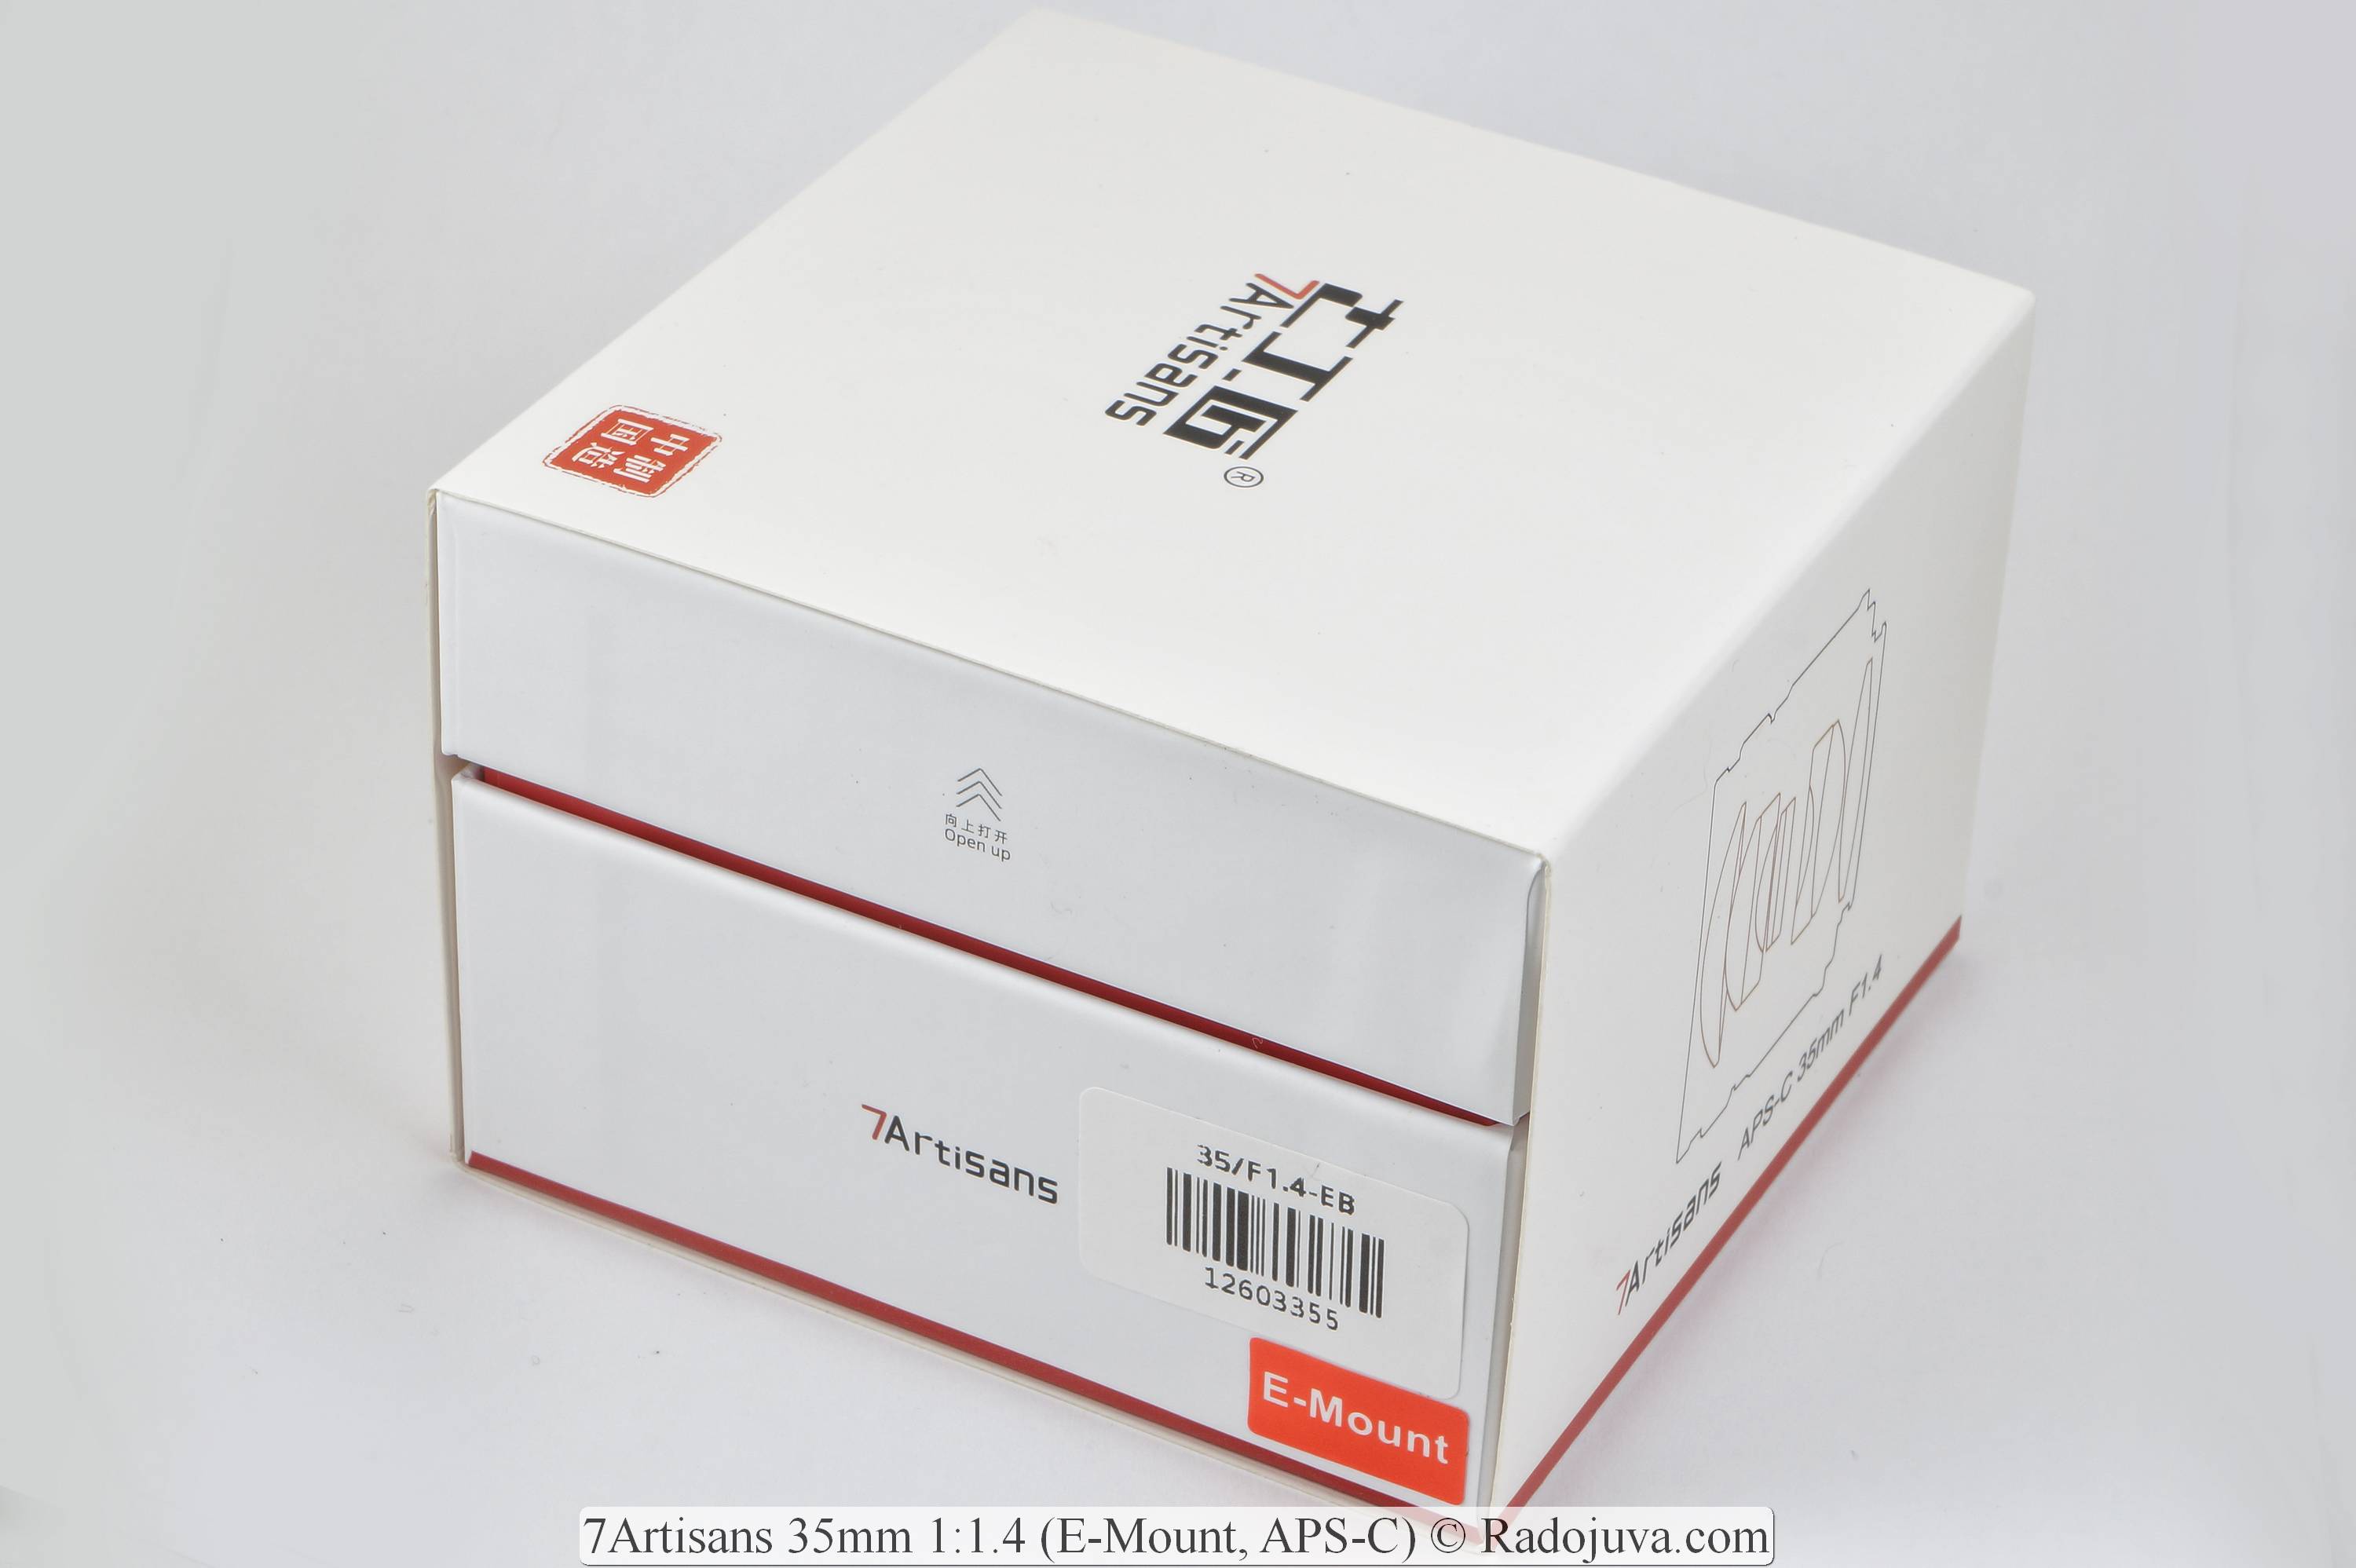 Box containing 7Artisans 35mm 1:1.4 lens